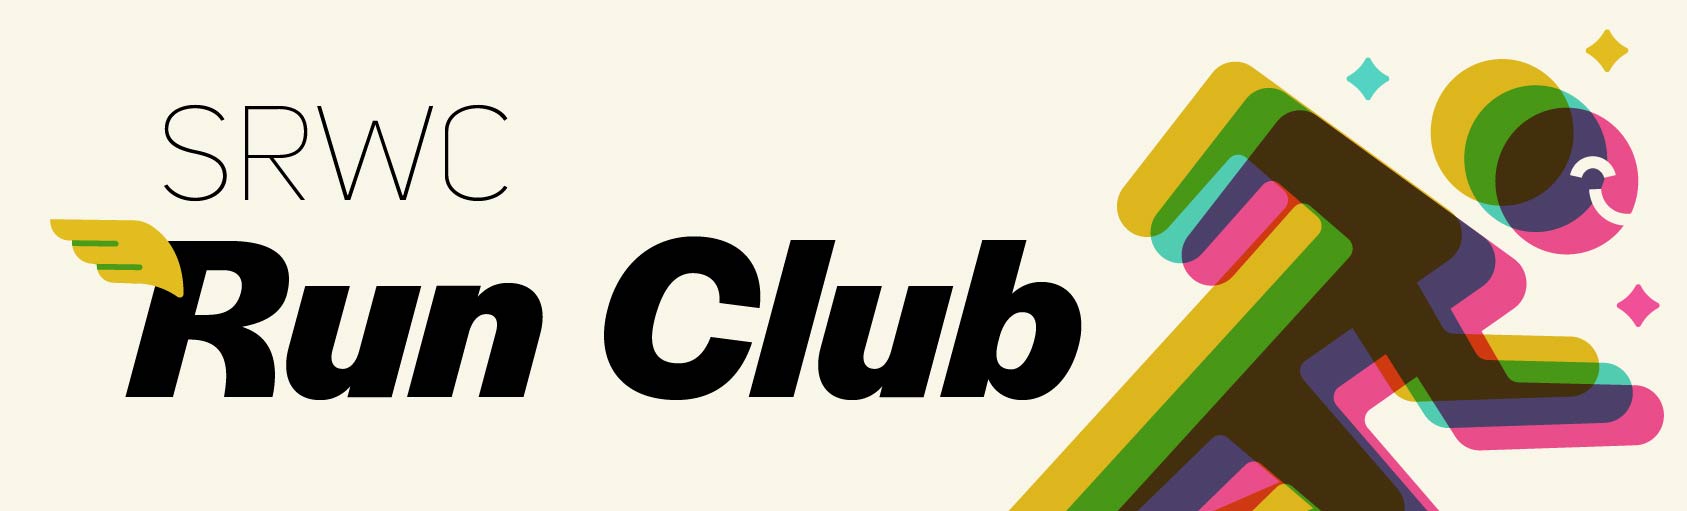 Join the SRWC Run Club banner